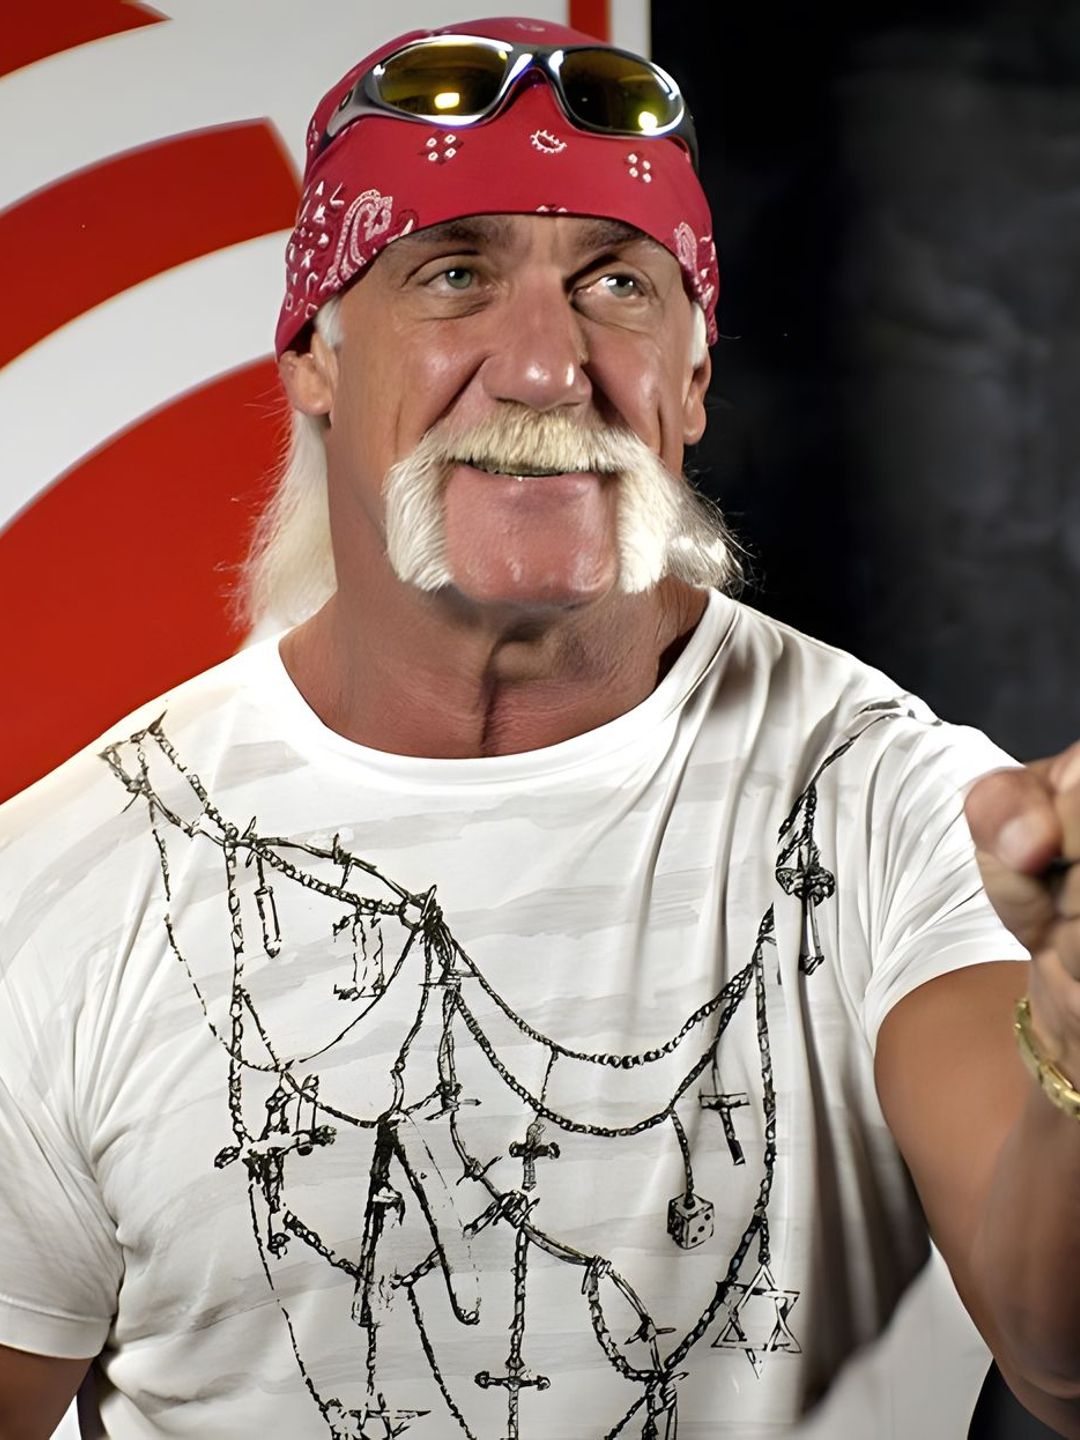 Hulk Hogan main achievements